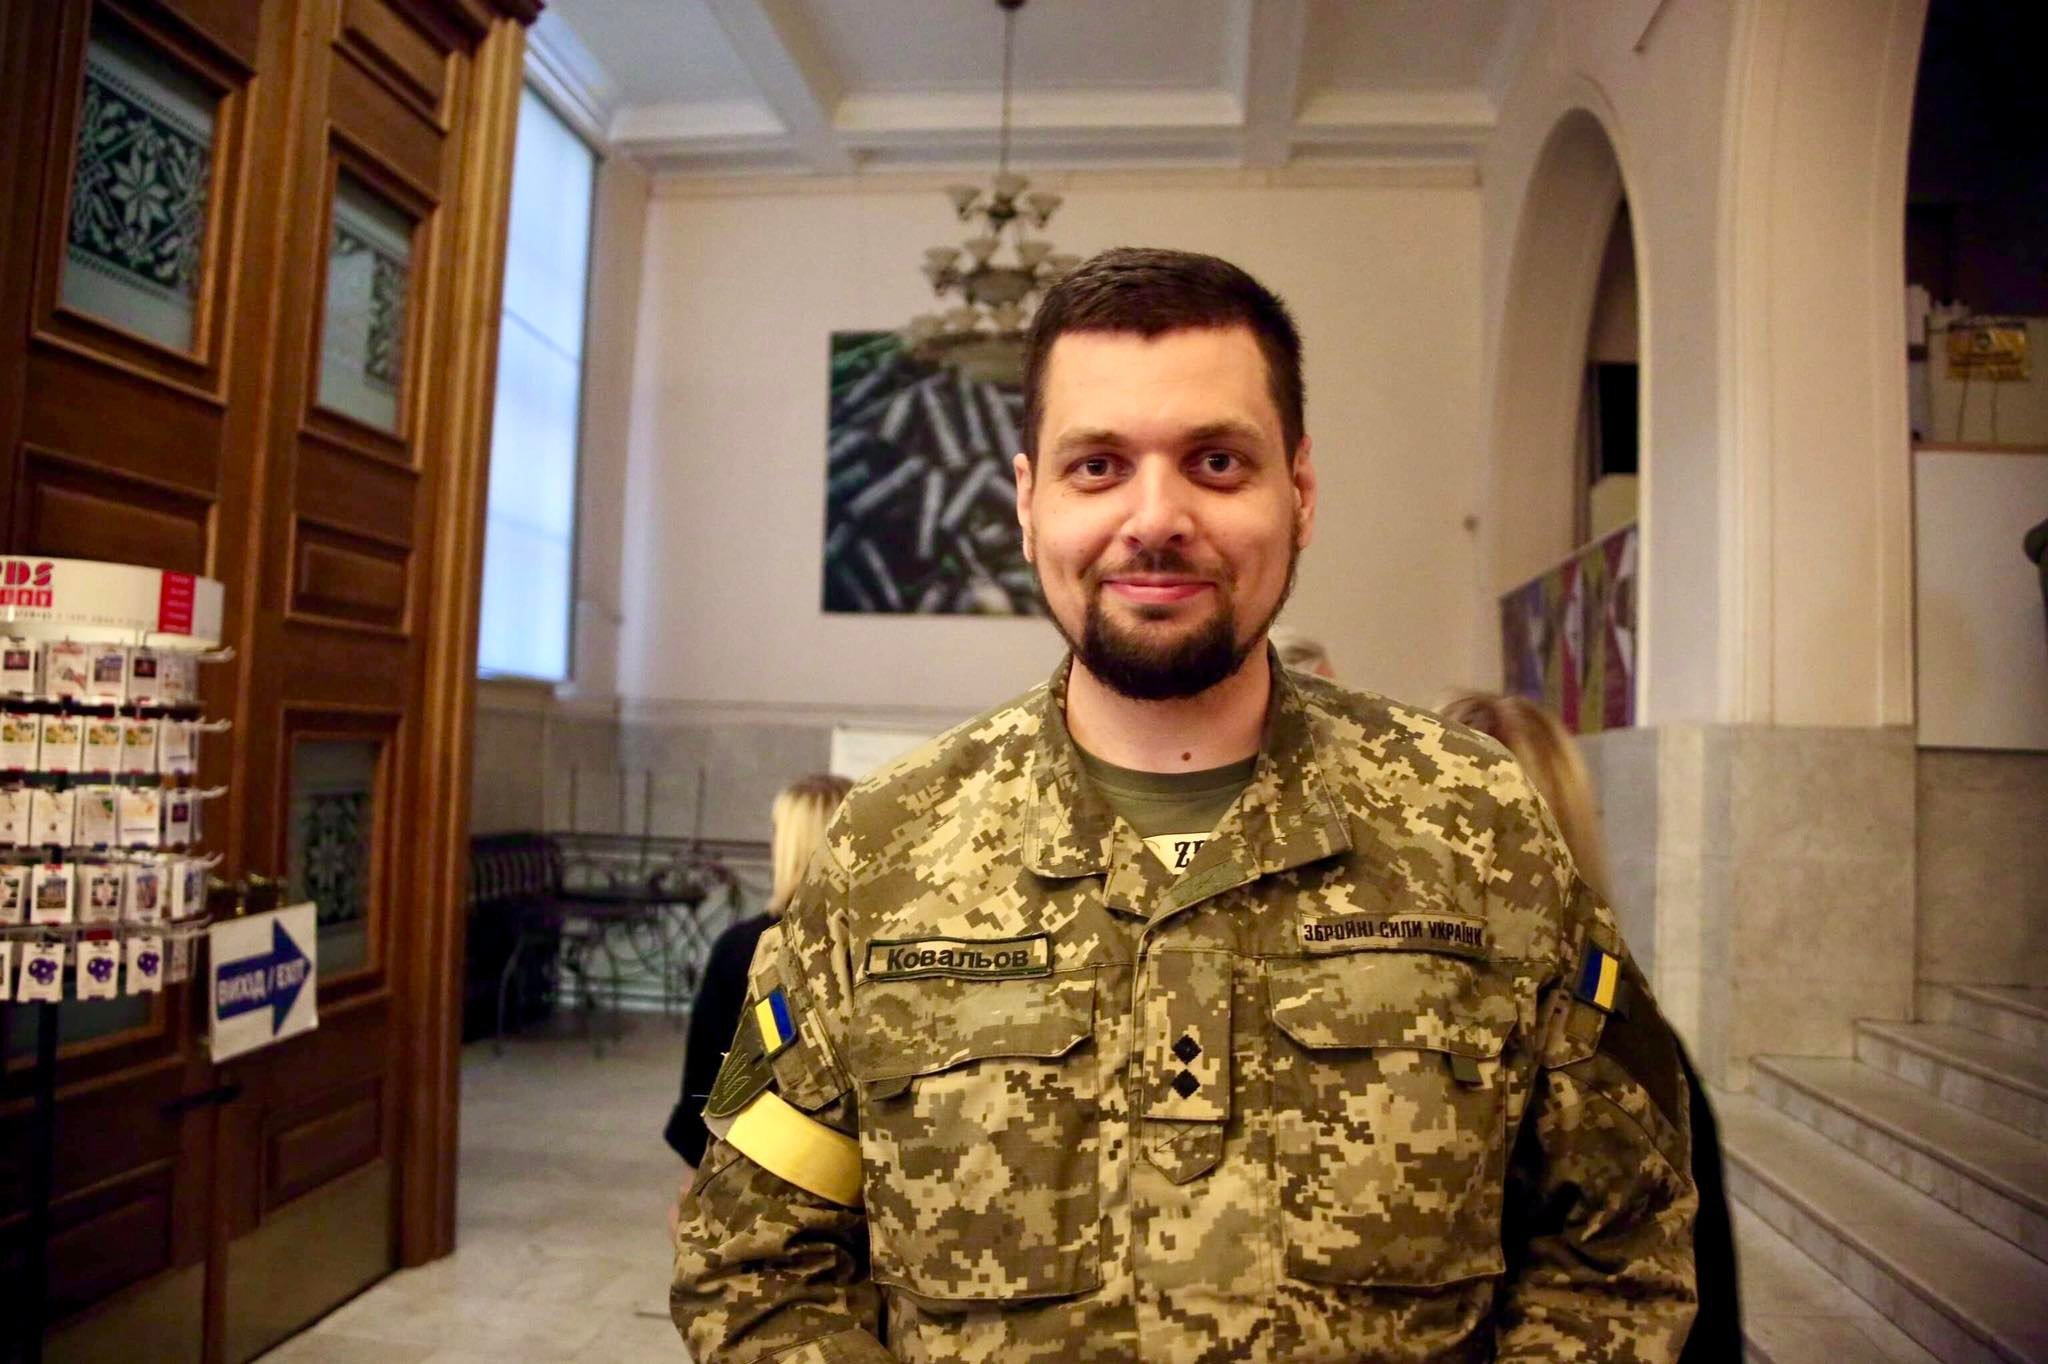 Andriy Kovaliov, press oficer of Kyiv Territorial Defense. Photo by Euromaidan Press